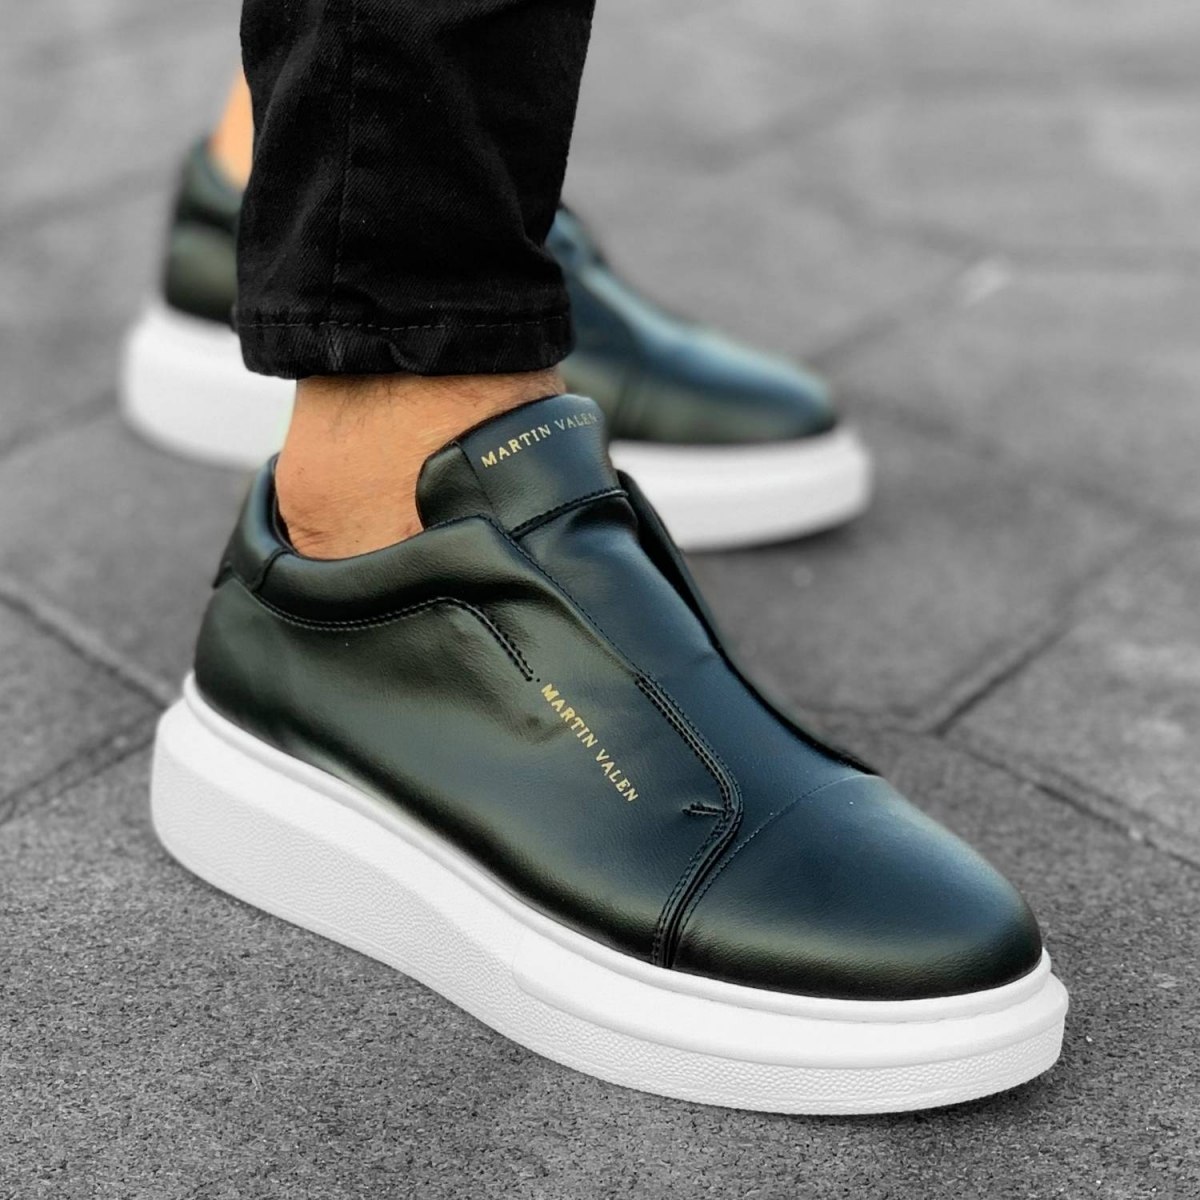 MartinValen Slip-on Sneakers in Black&White